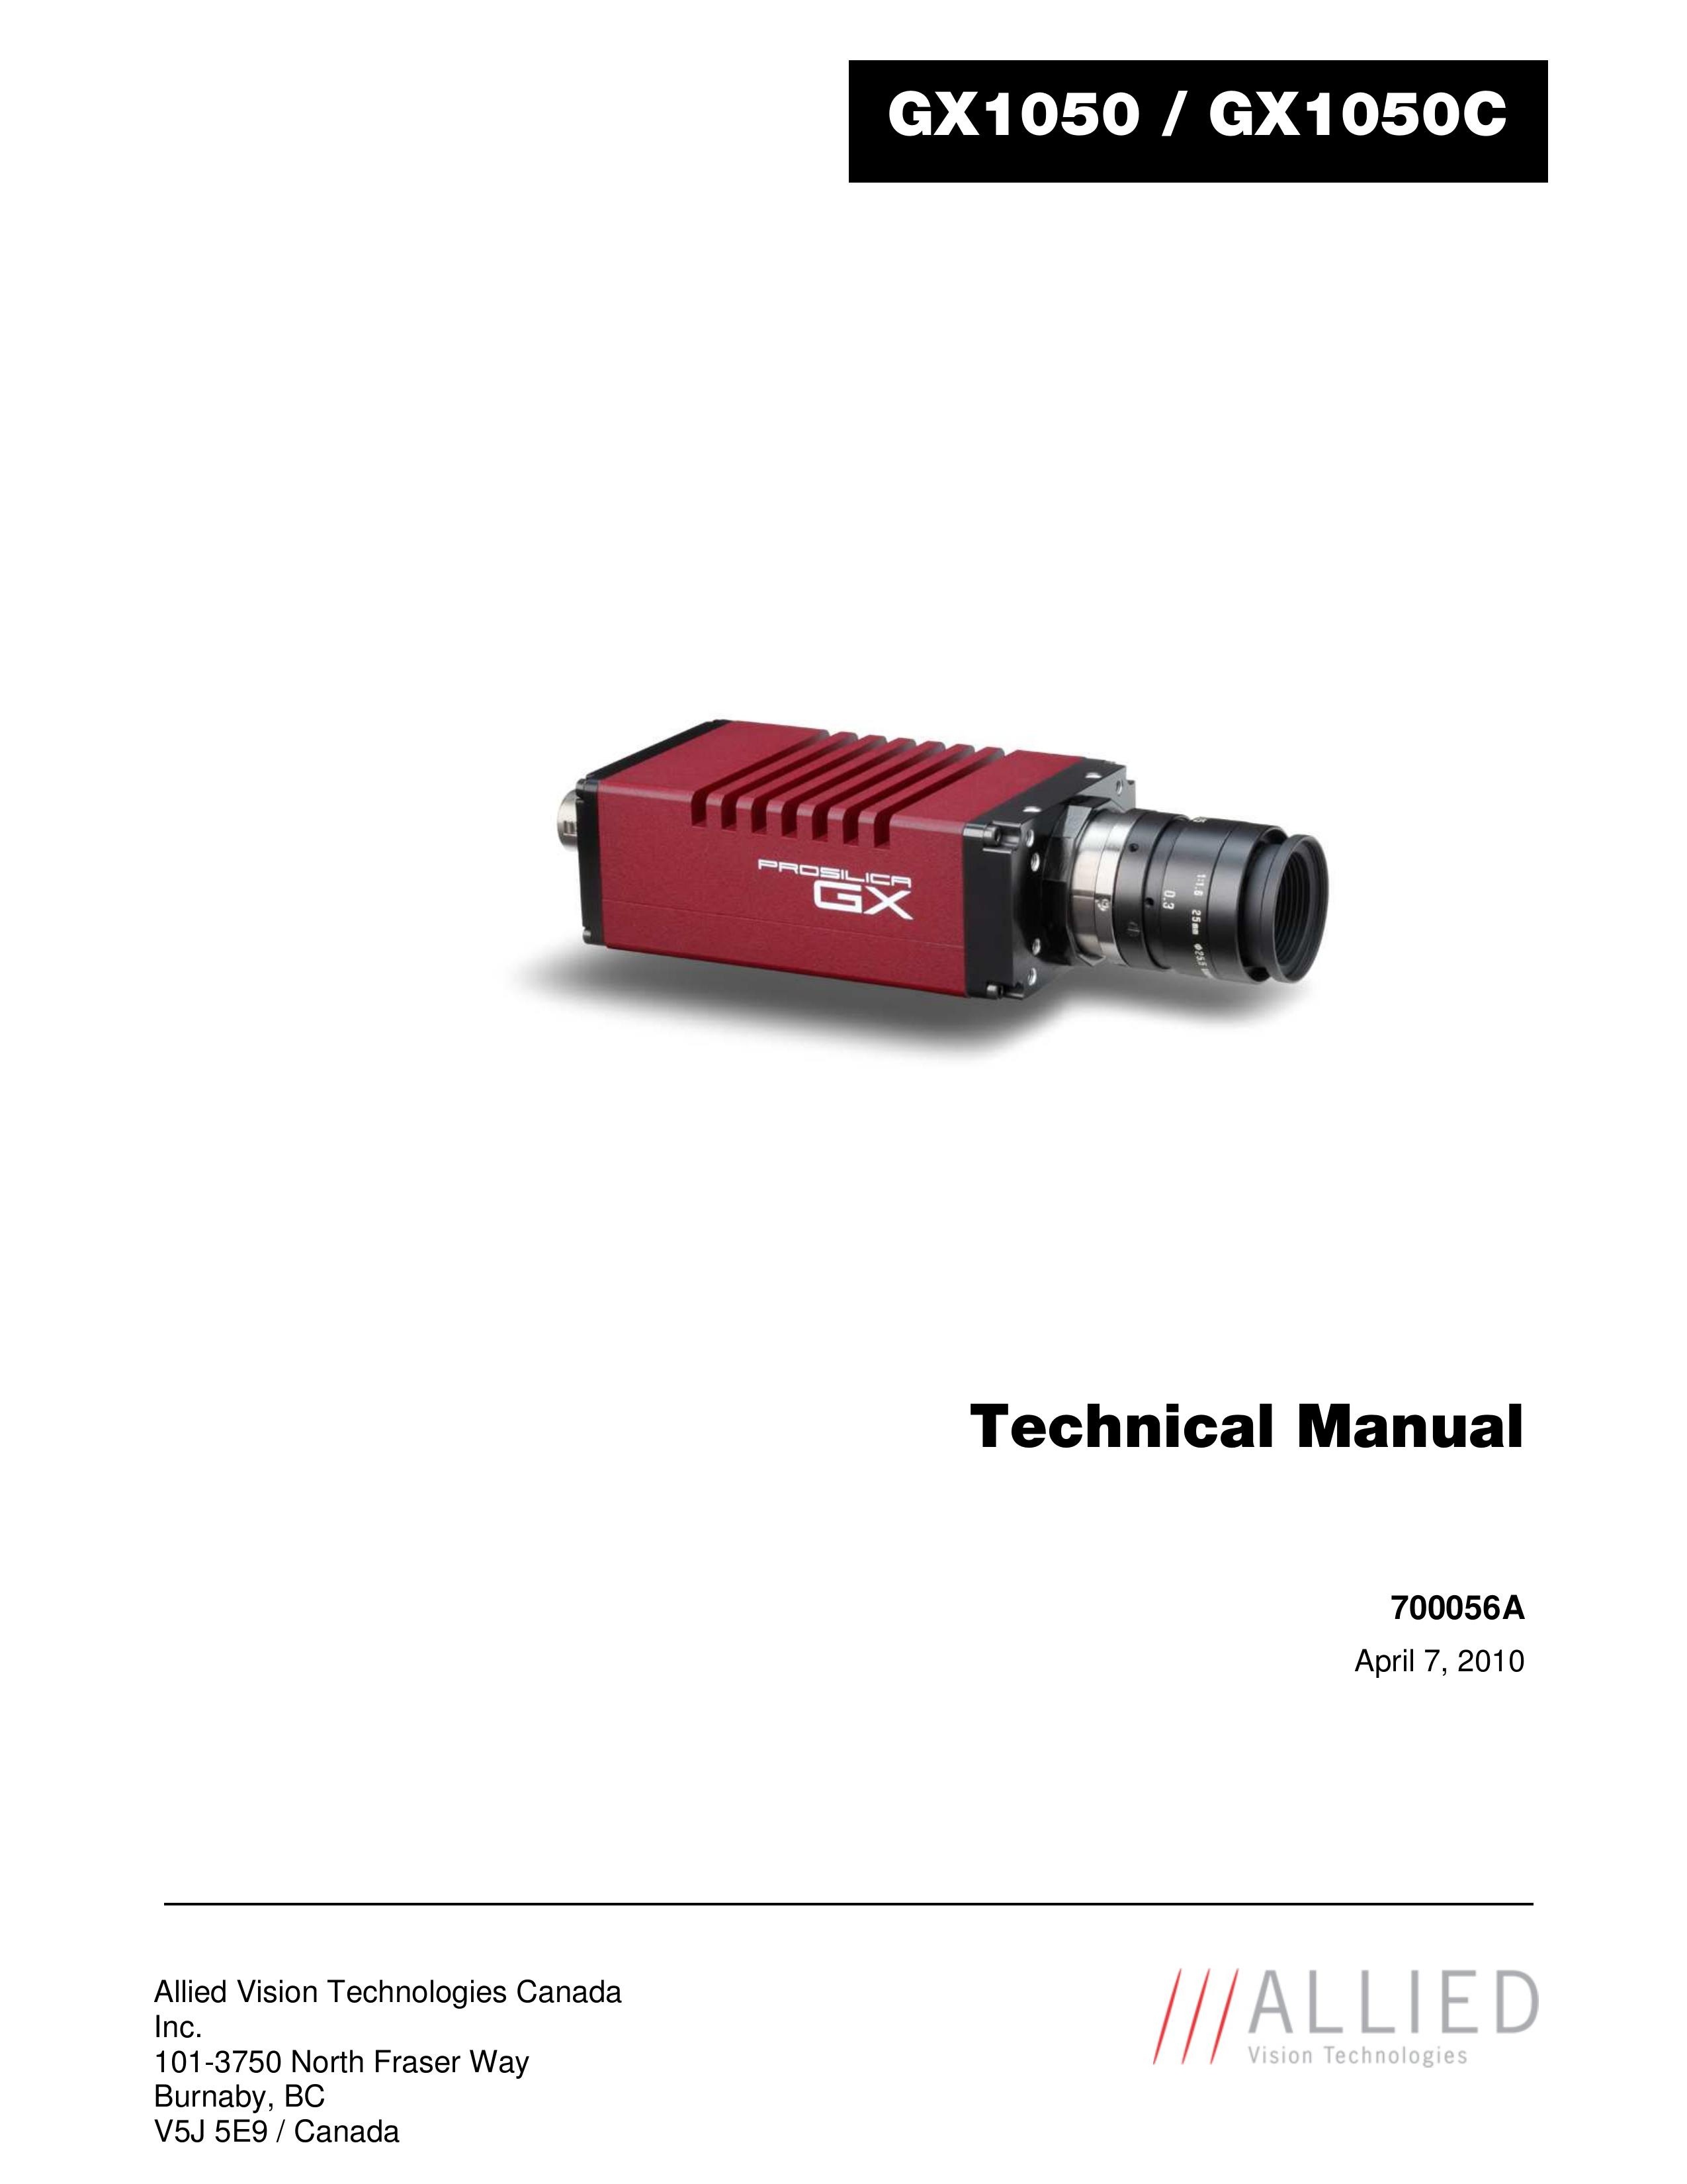 Allied International GX1050C Camcorder User Manual